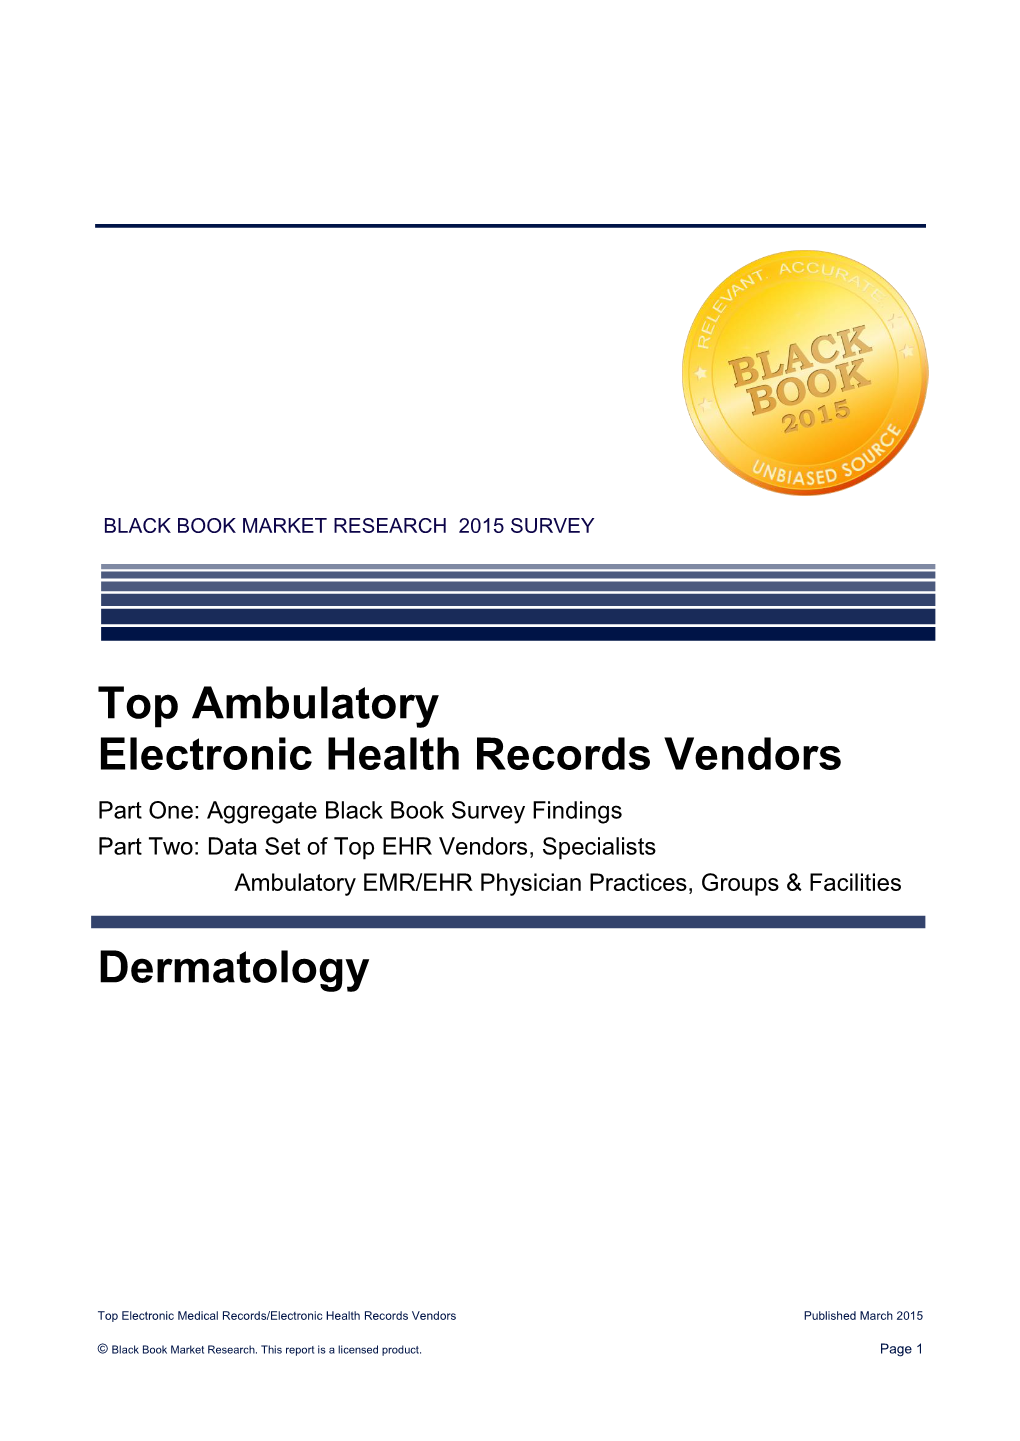 Top Ambulatory Electronic Health Records Vendors Dermatology